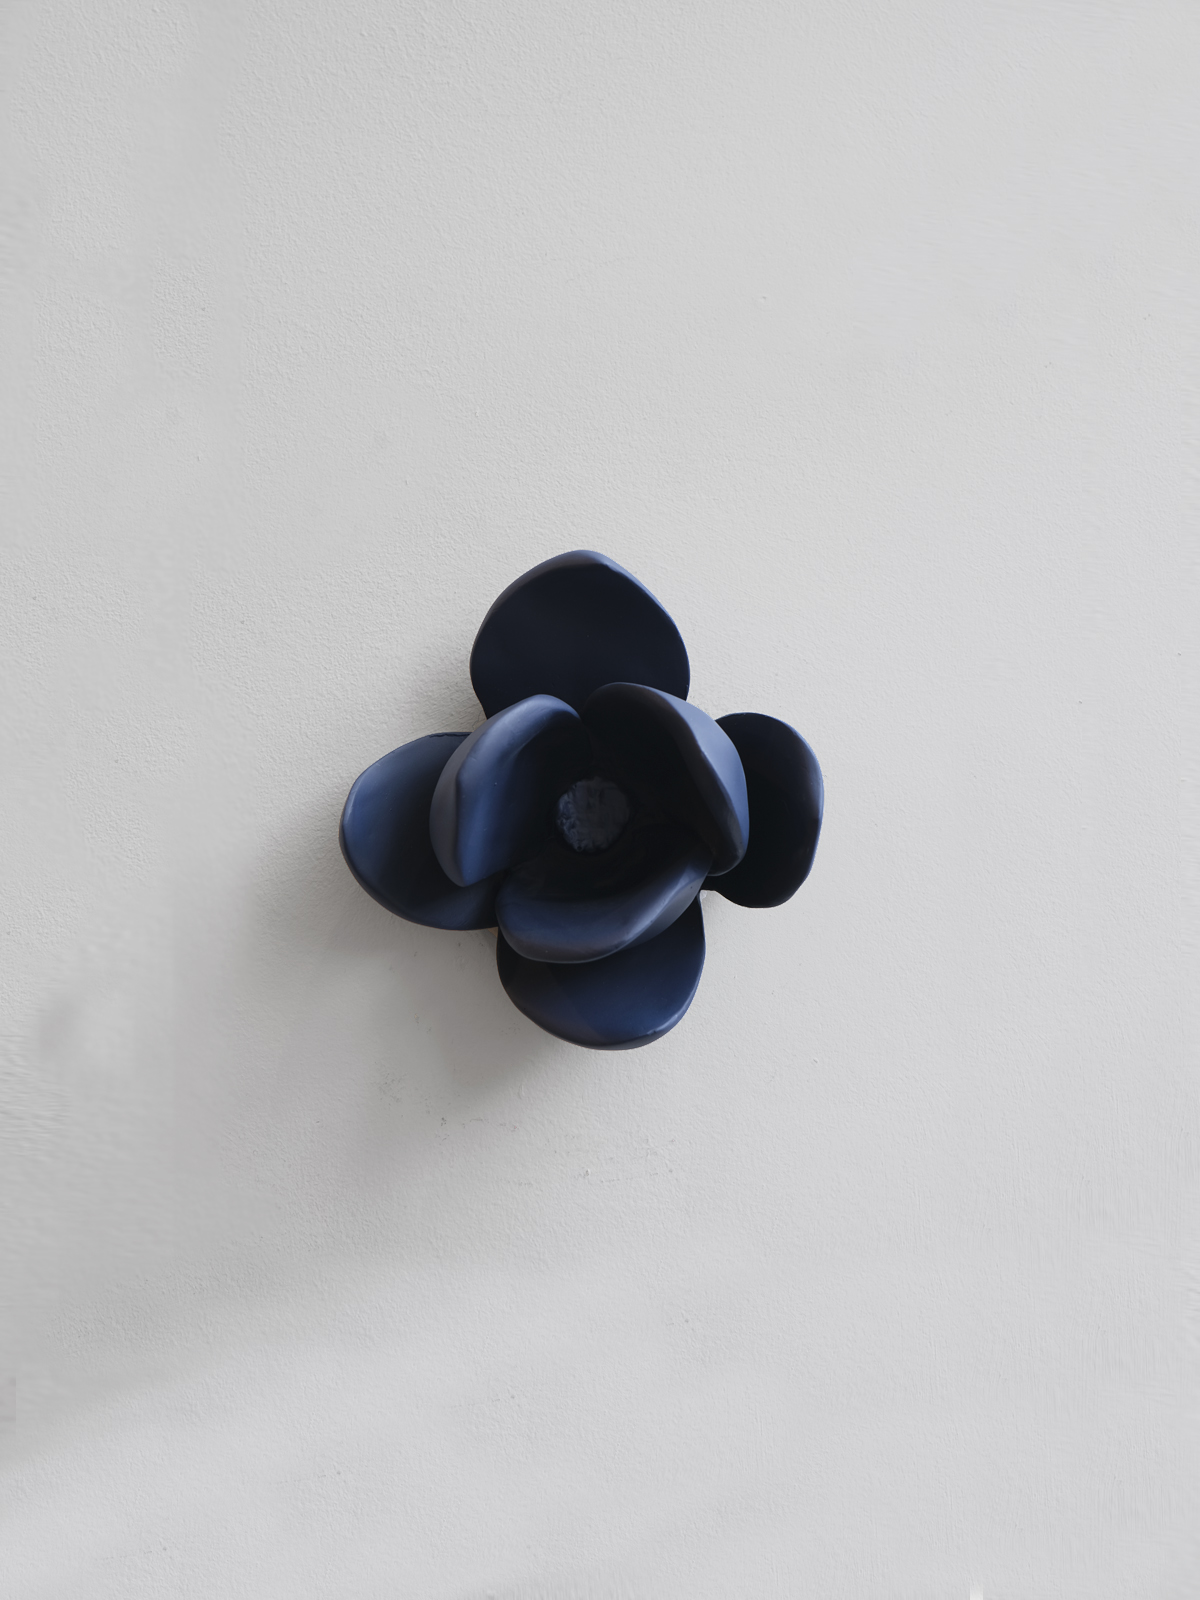 Iva Viana Magnolia Flower Small - Dark Blue Plaster Sculpture Decor